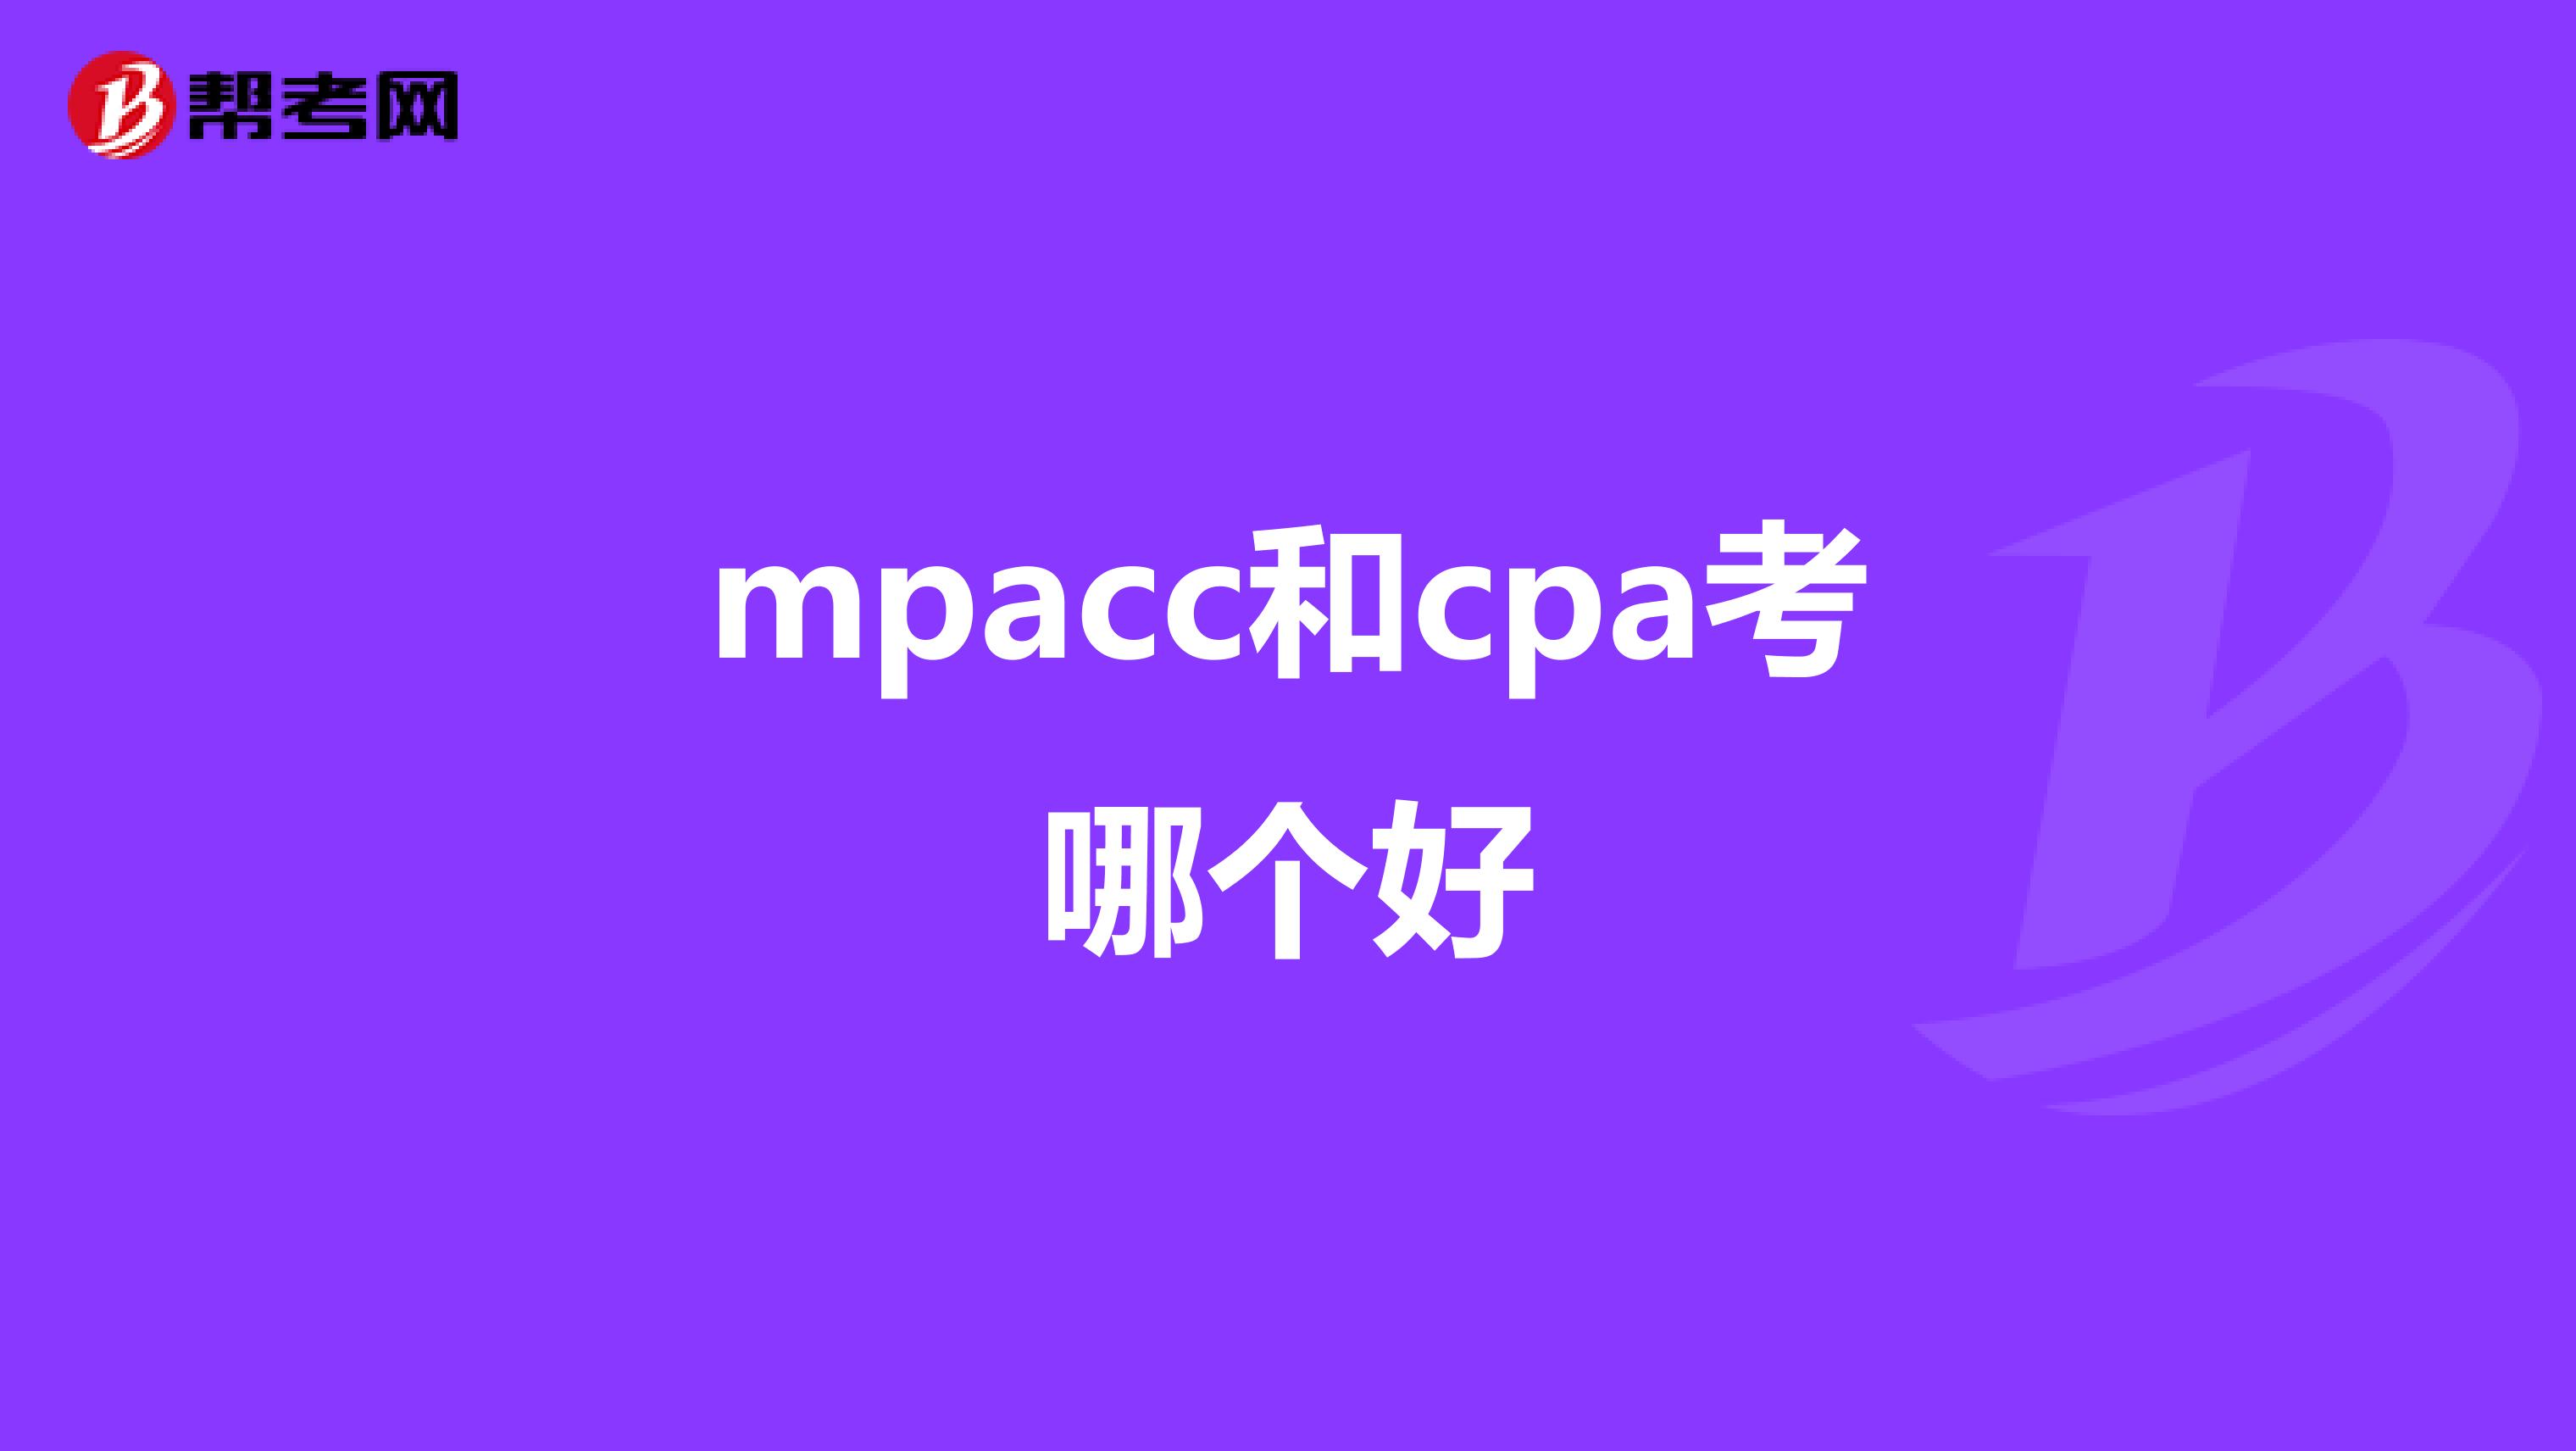 mpacc和cpa考哪个好